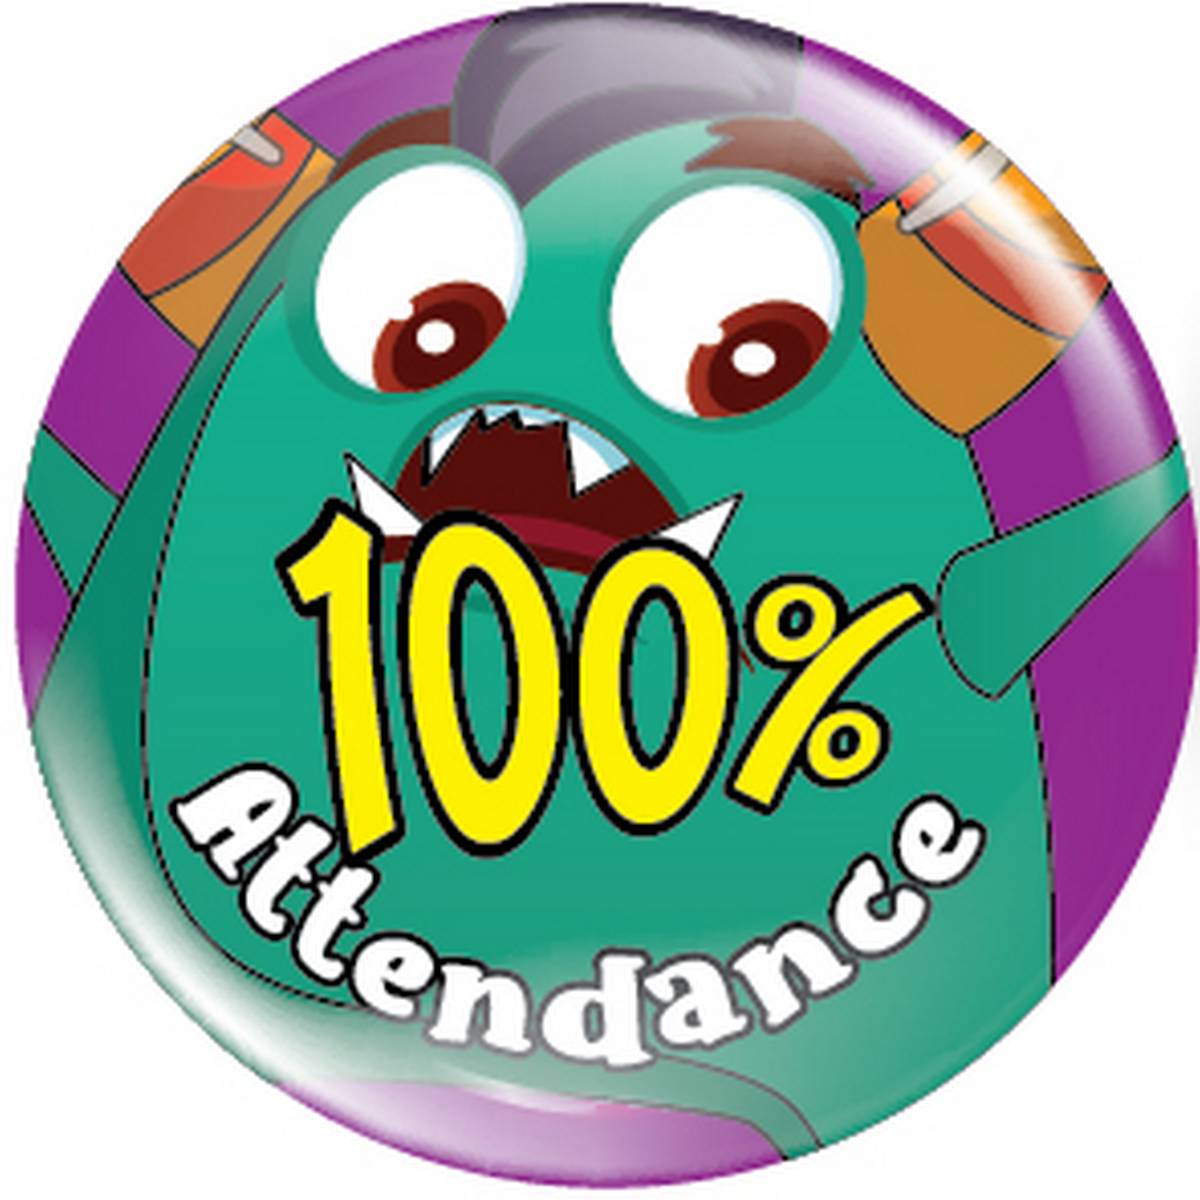 100% Attendance Badges